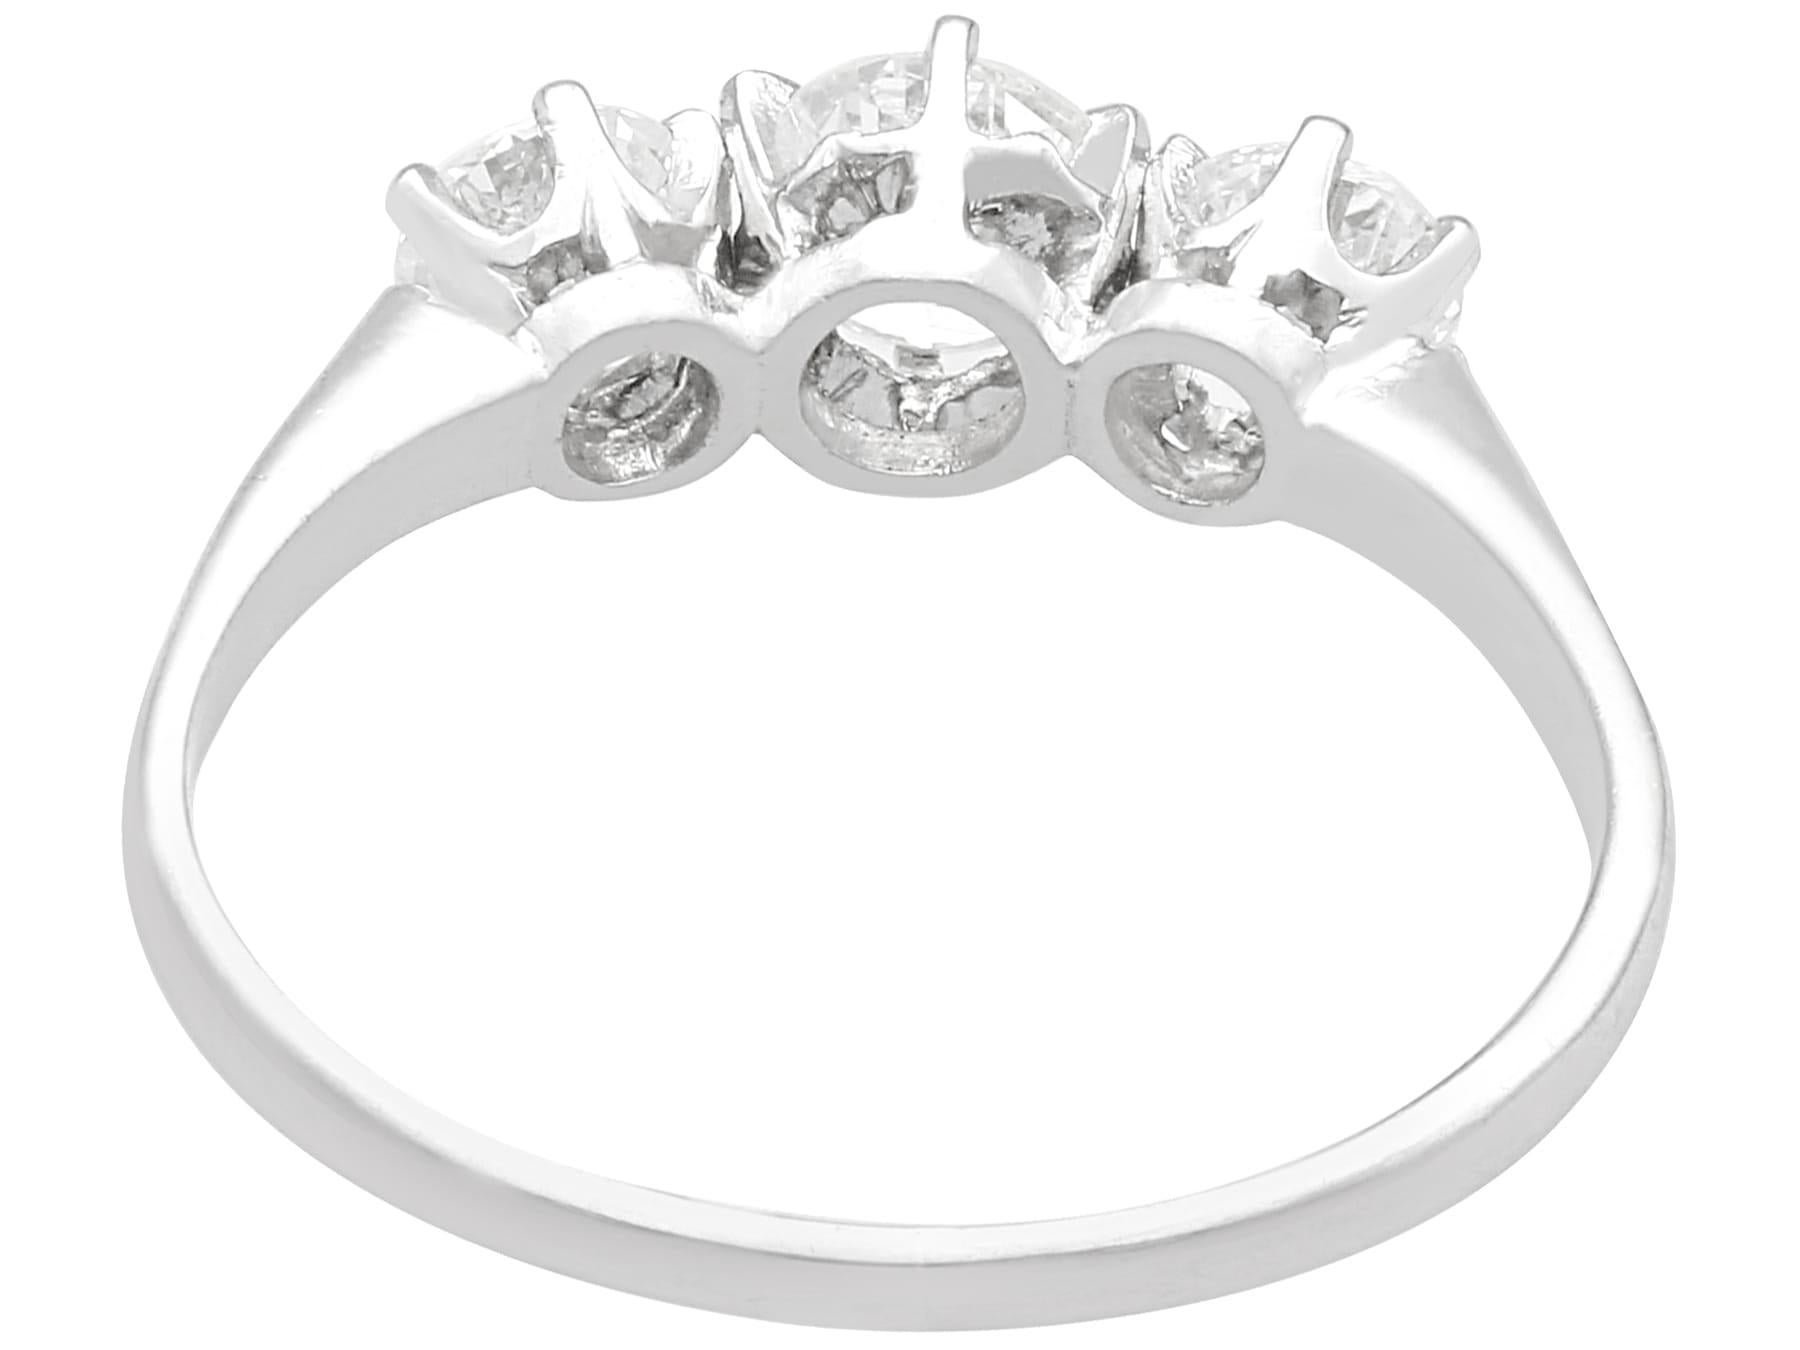 trilogy diamond engagement ring